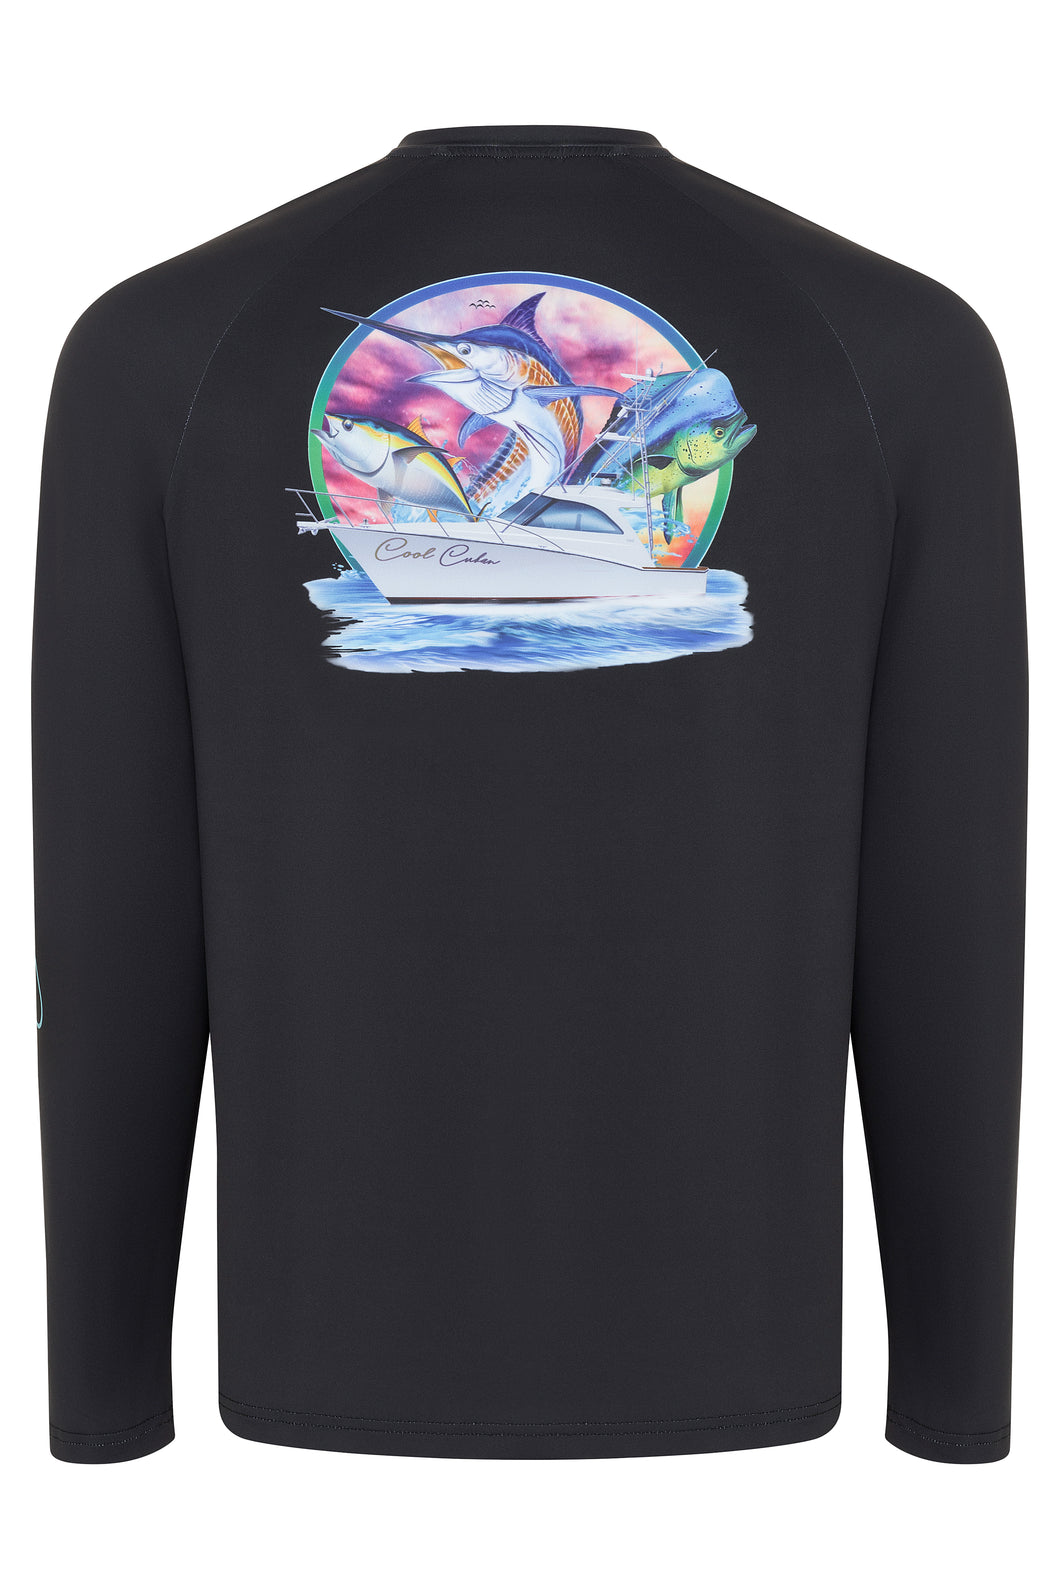 Fishing Shirt Black with SeaFoam logo crew neck T-shirt